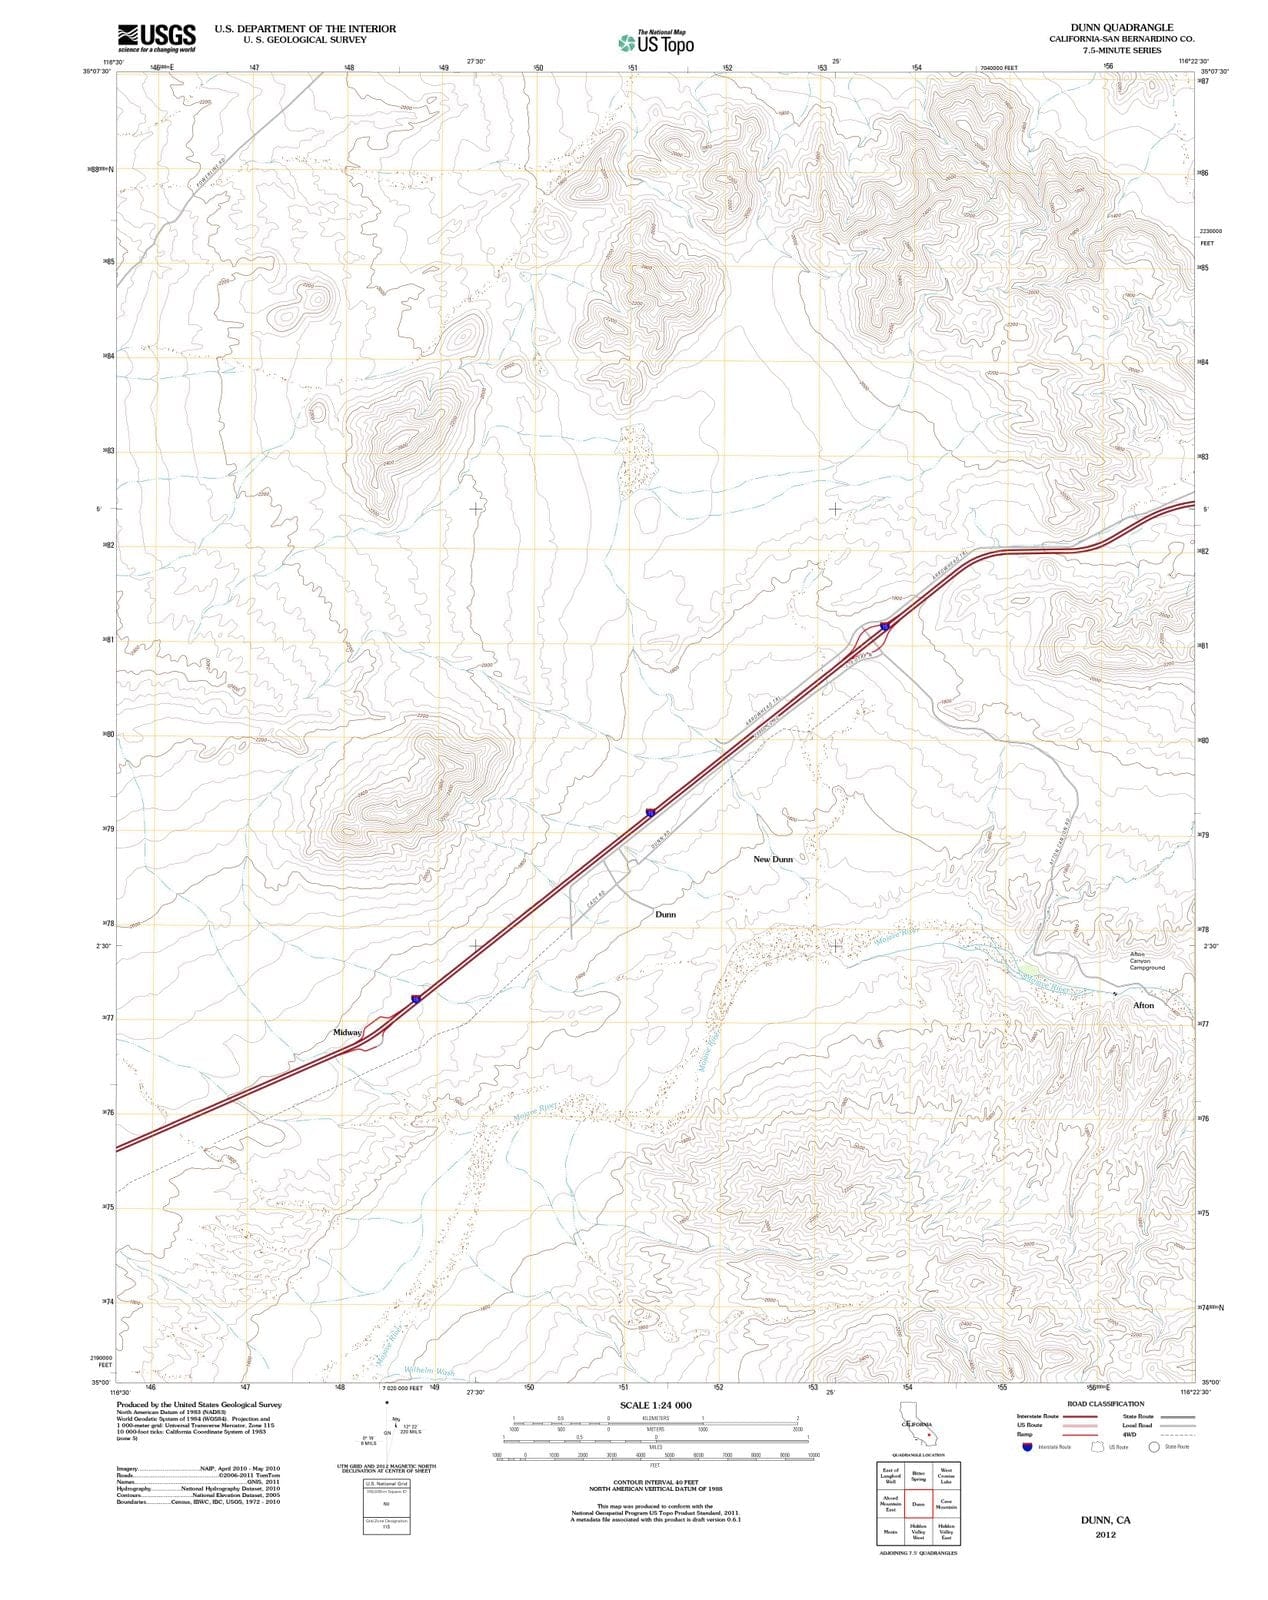 2012 Dunn, CA - California - USGS Topographic Map